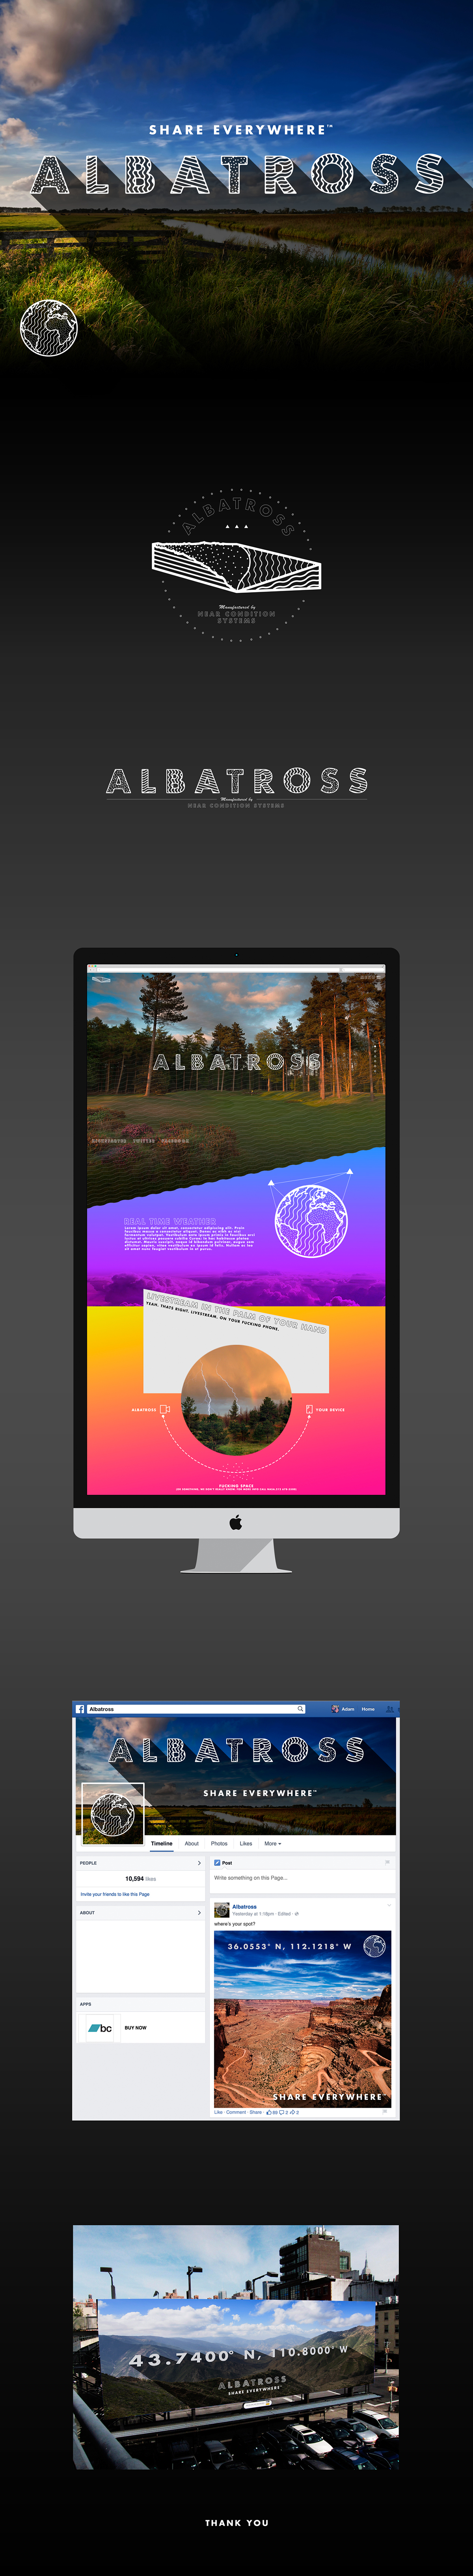 albatross design art facebook social logo identity twitter Web mac iMac OOH billboard